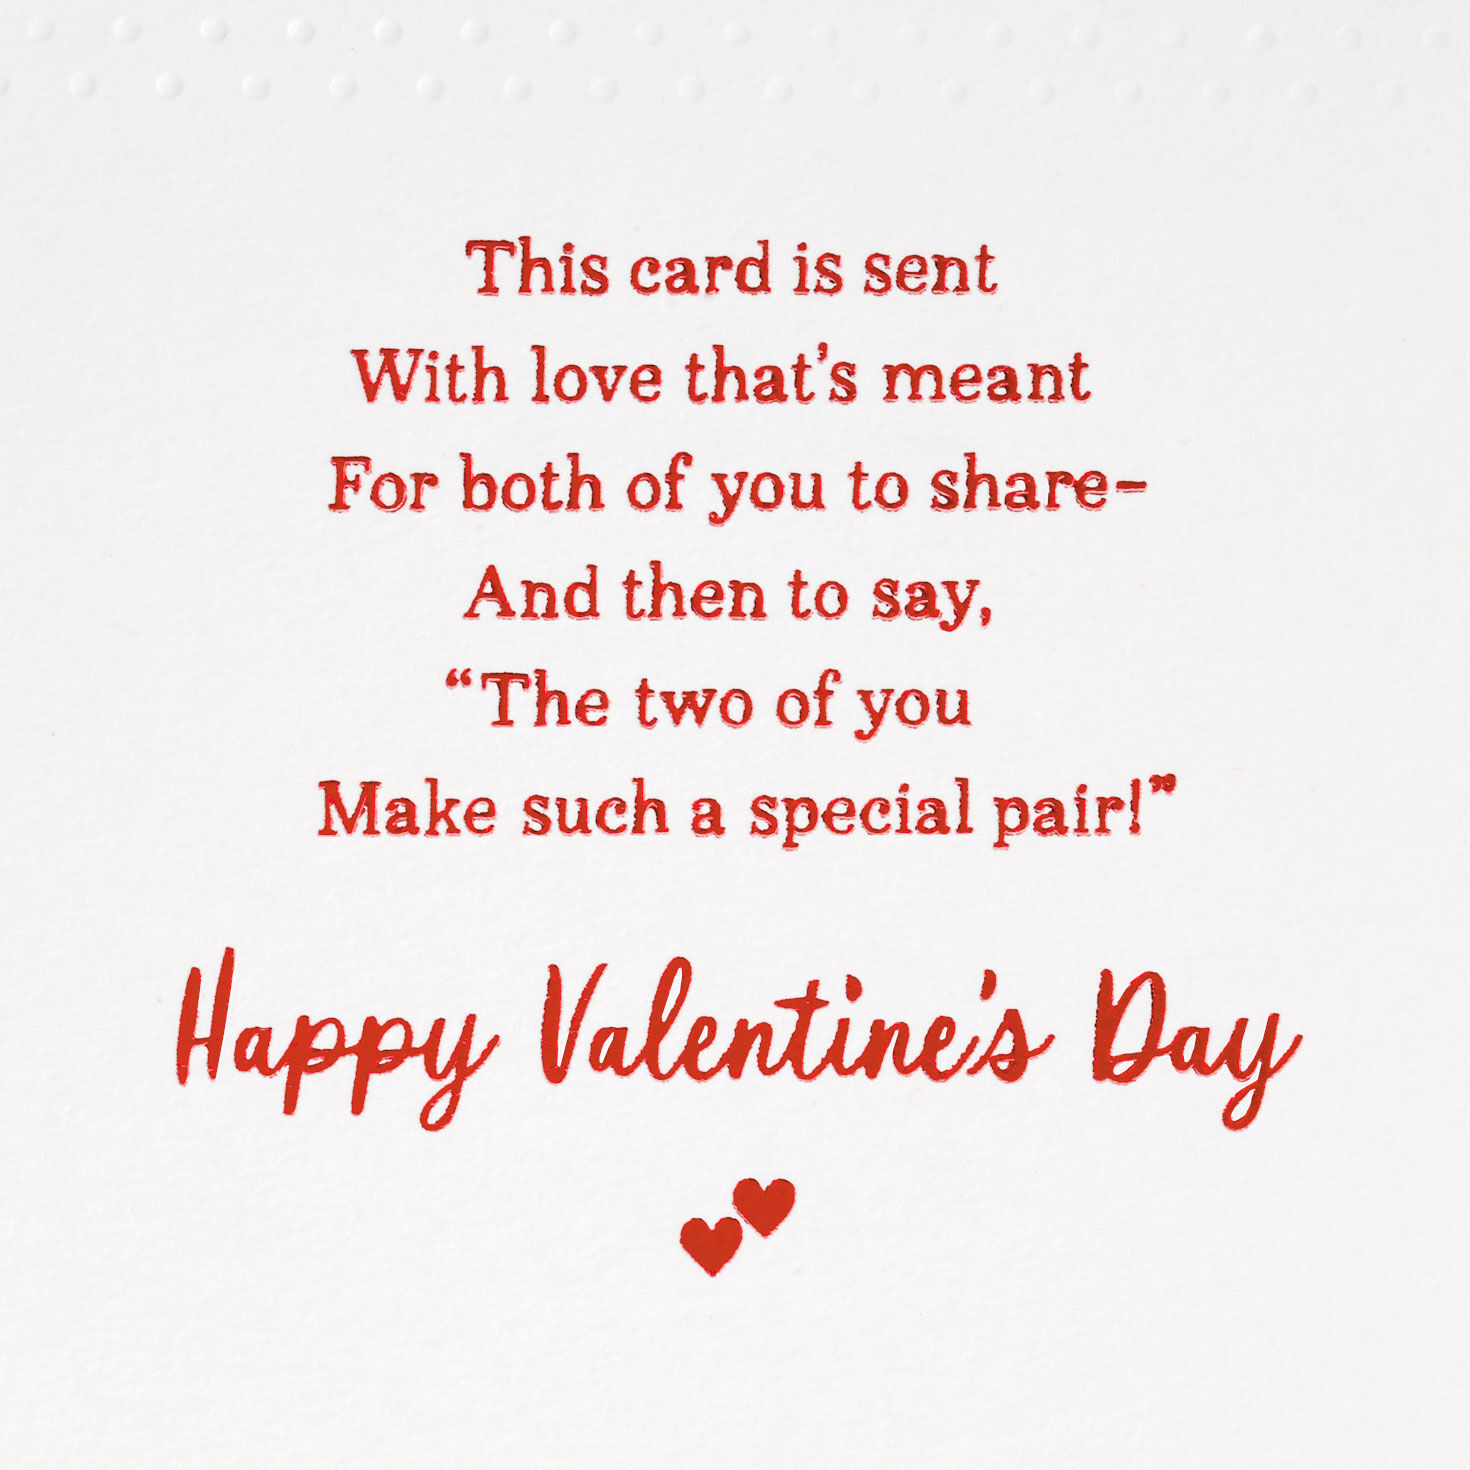 Teddy Bear Couple Valentine's Day Card for Both - Greeting Cards | Hallmark